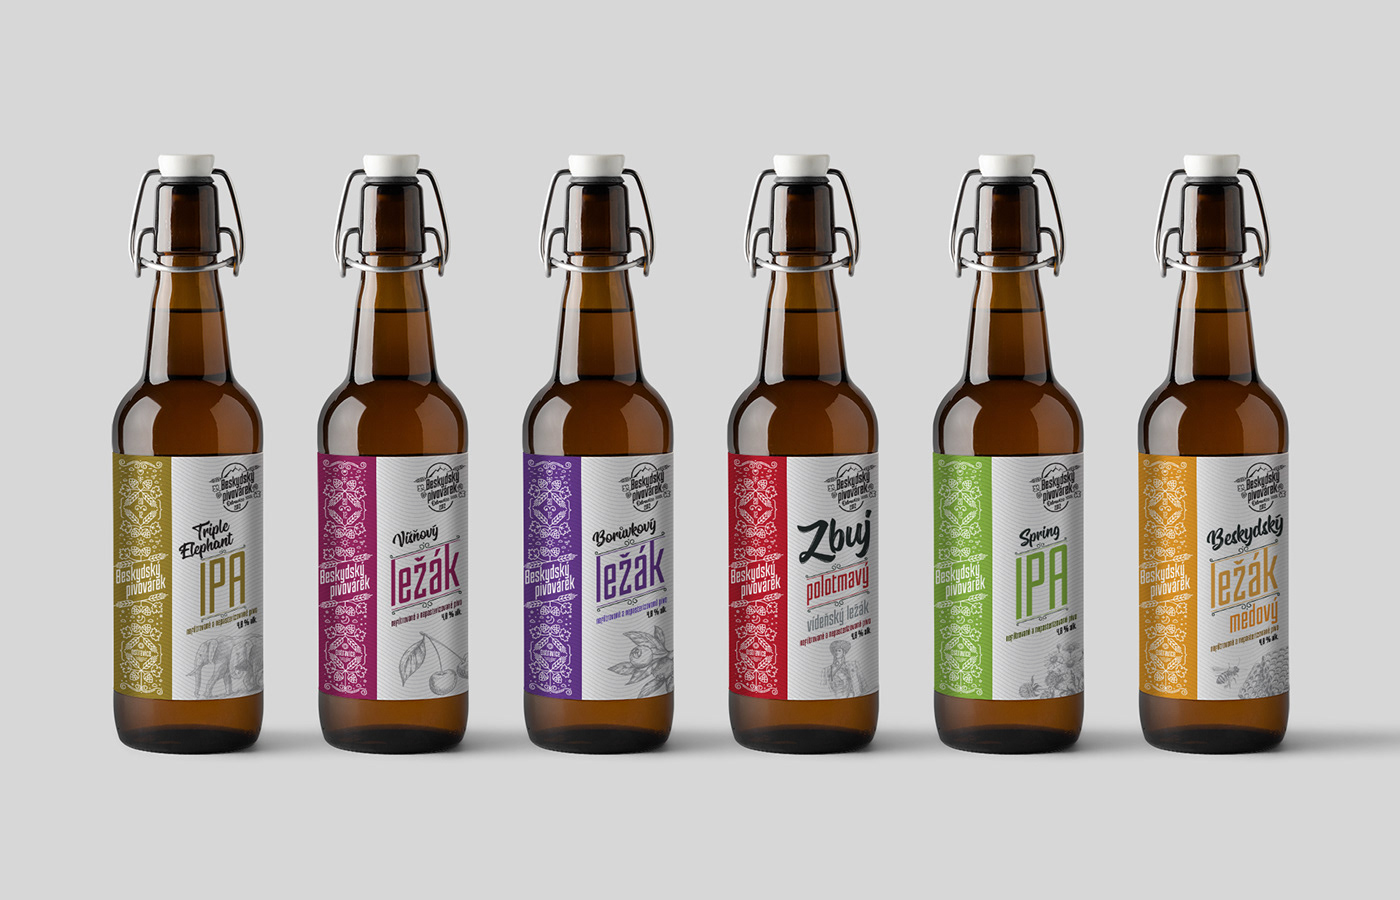 beer brewery hop bottle beskids etiquette Label brewing